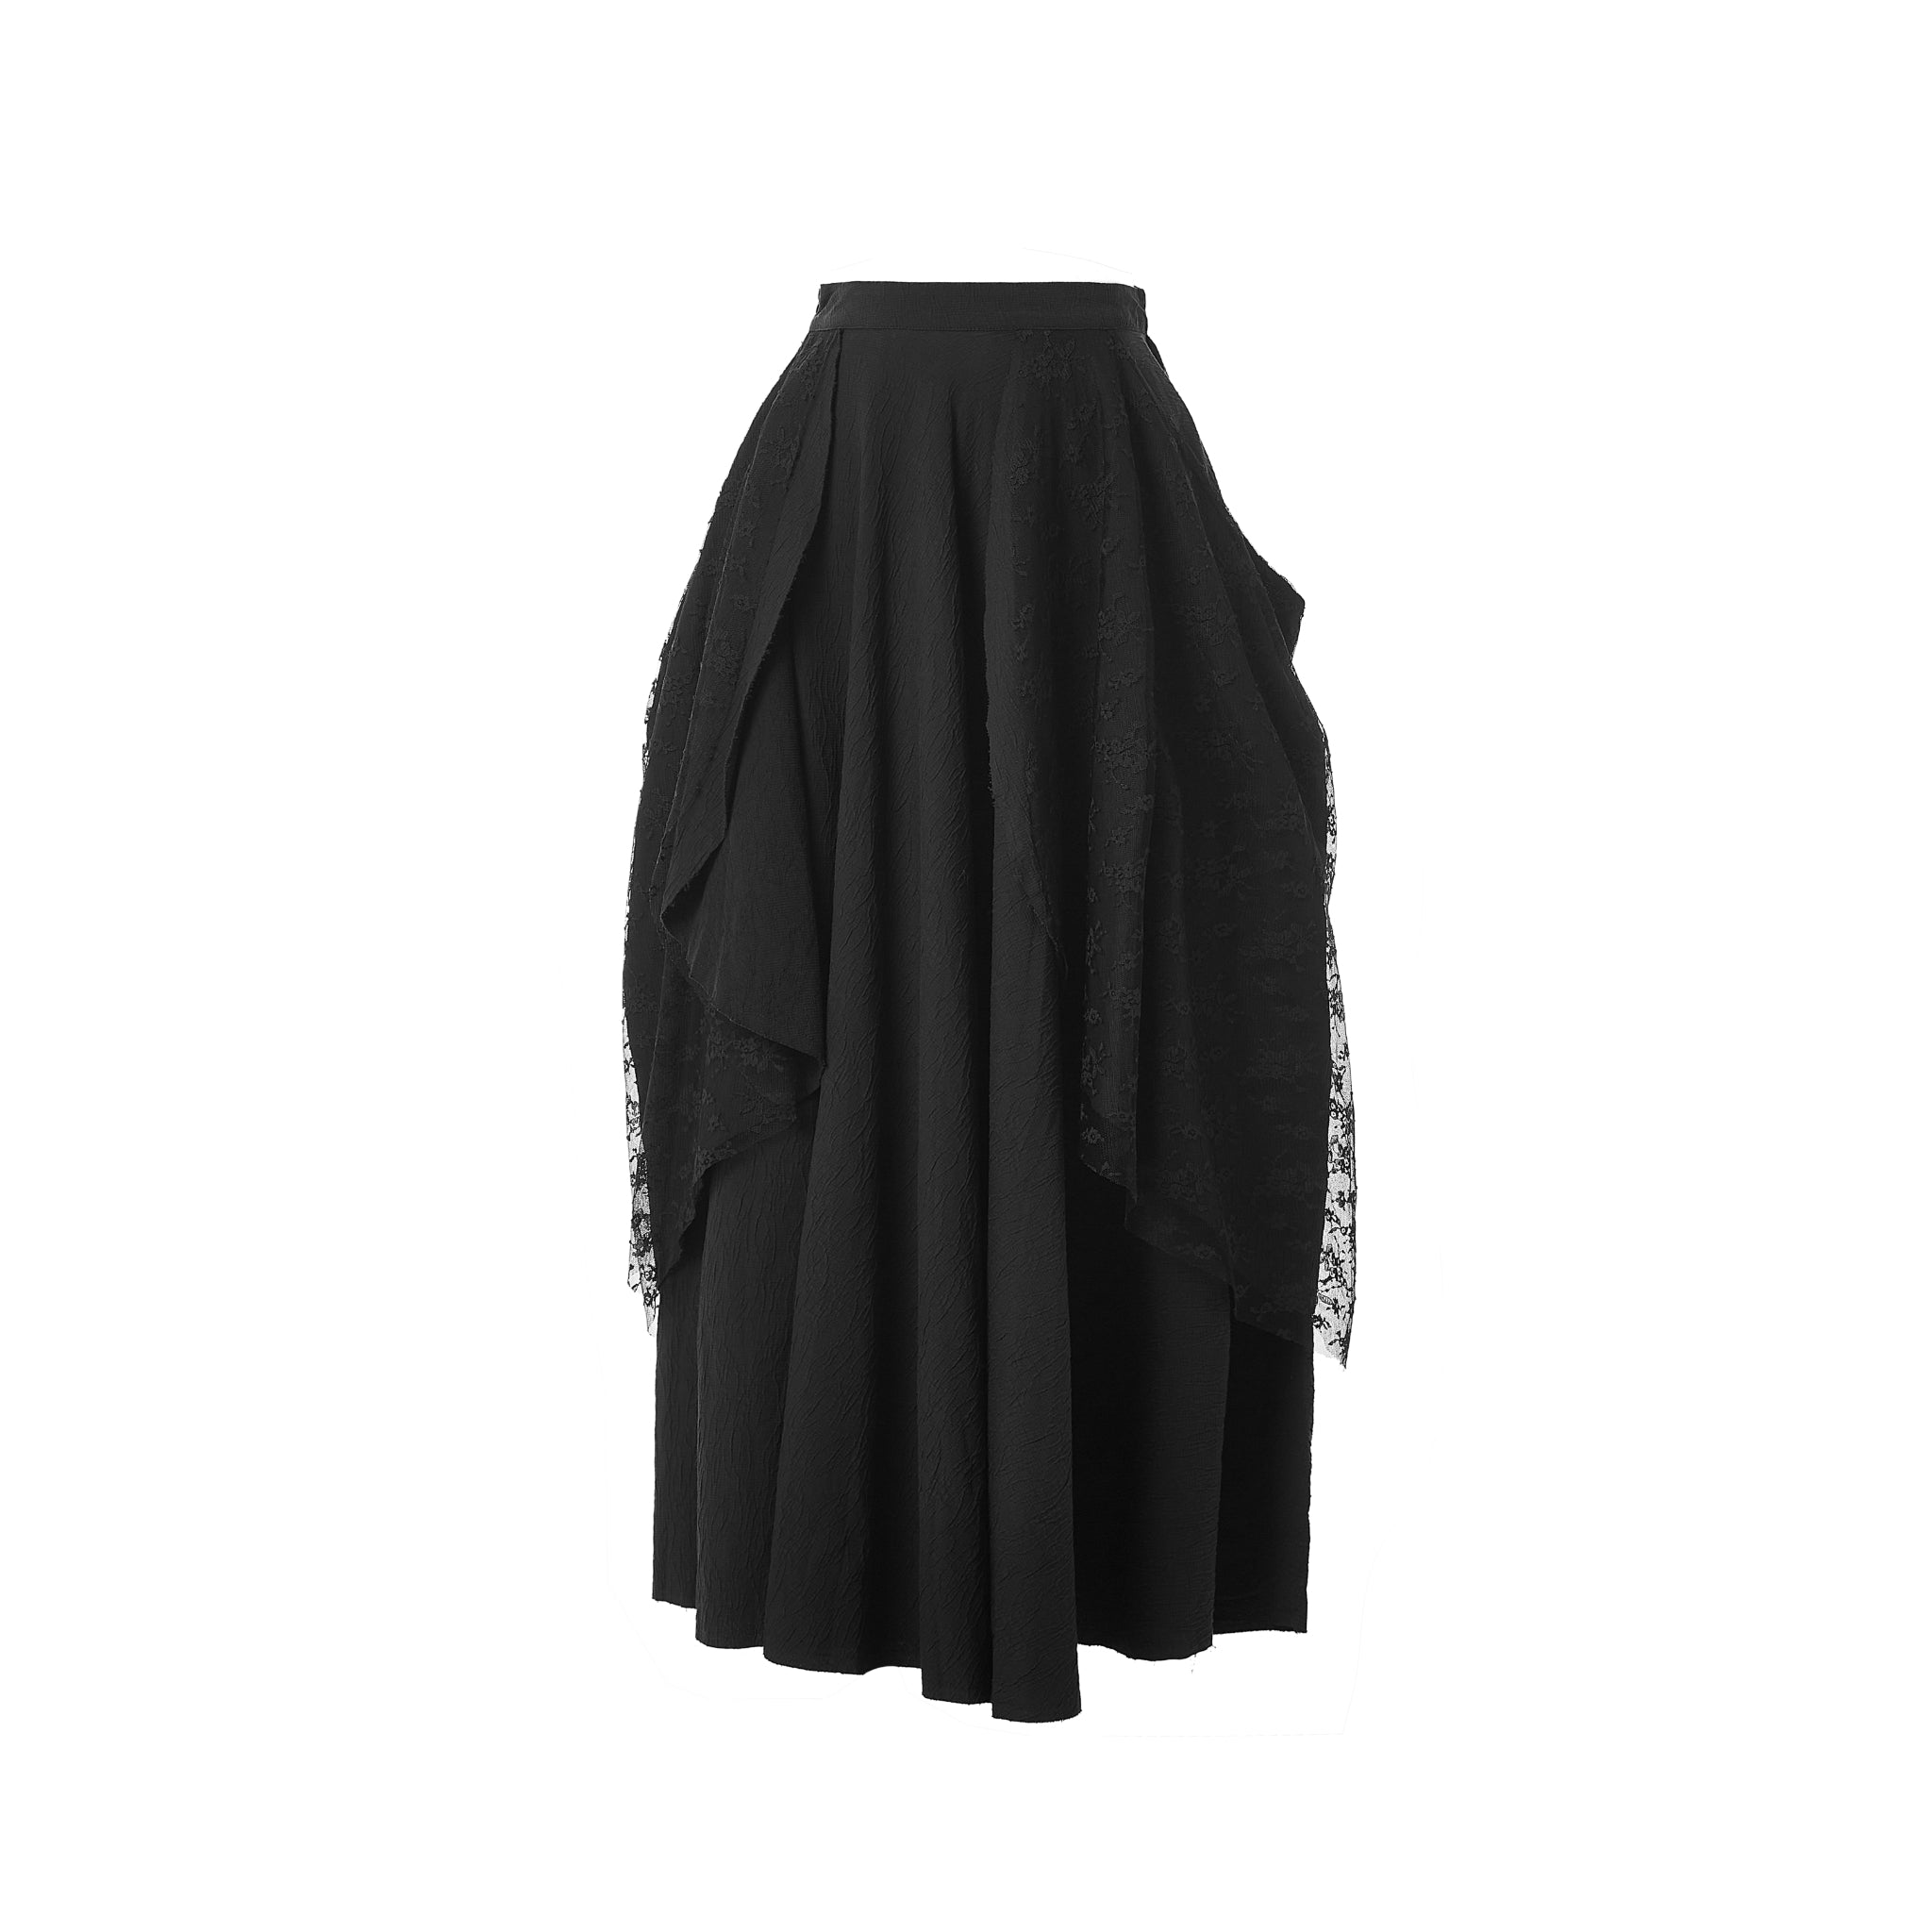 ELYWOOD Black Lace Skirt & MADA IN CHINA